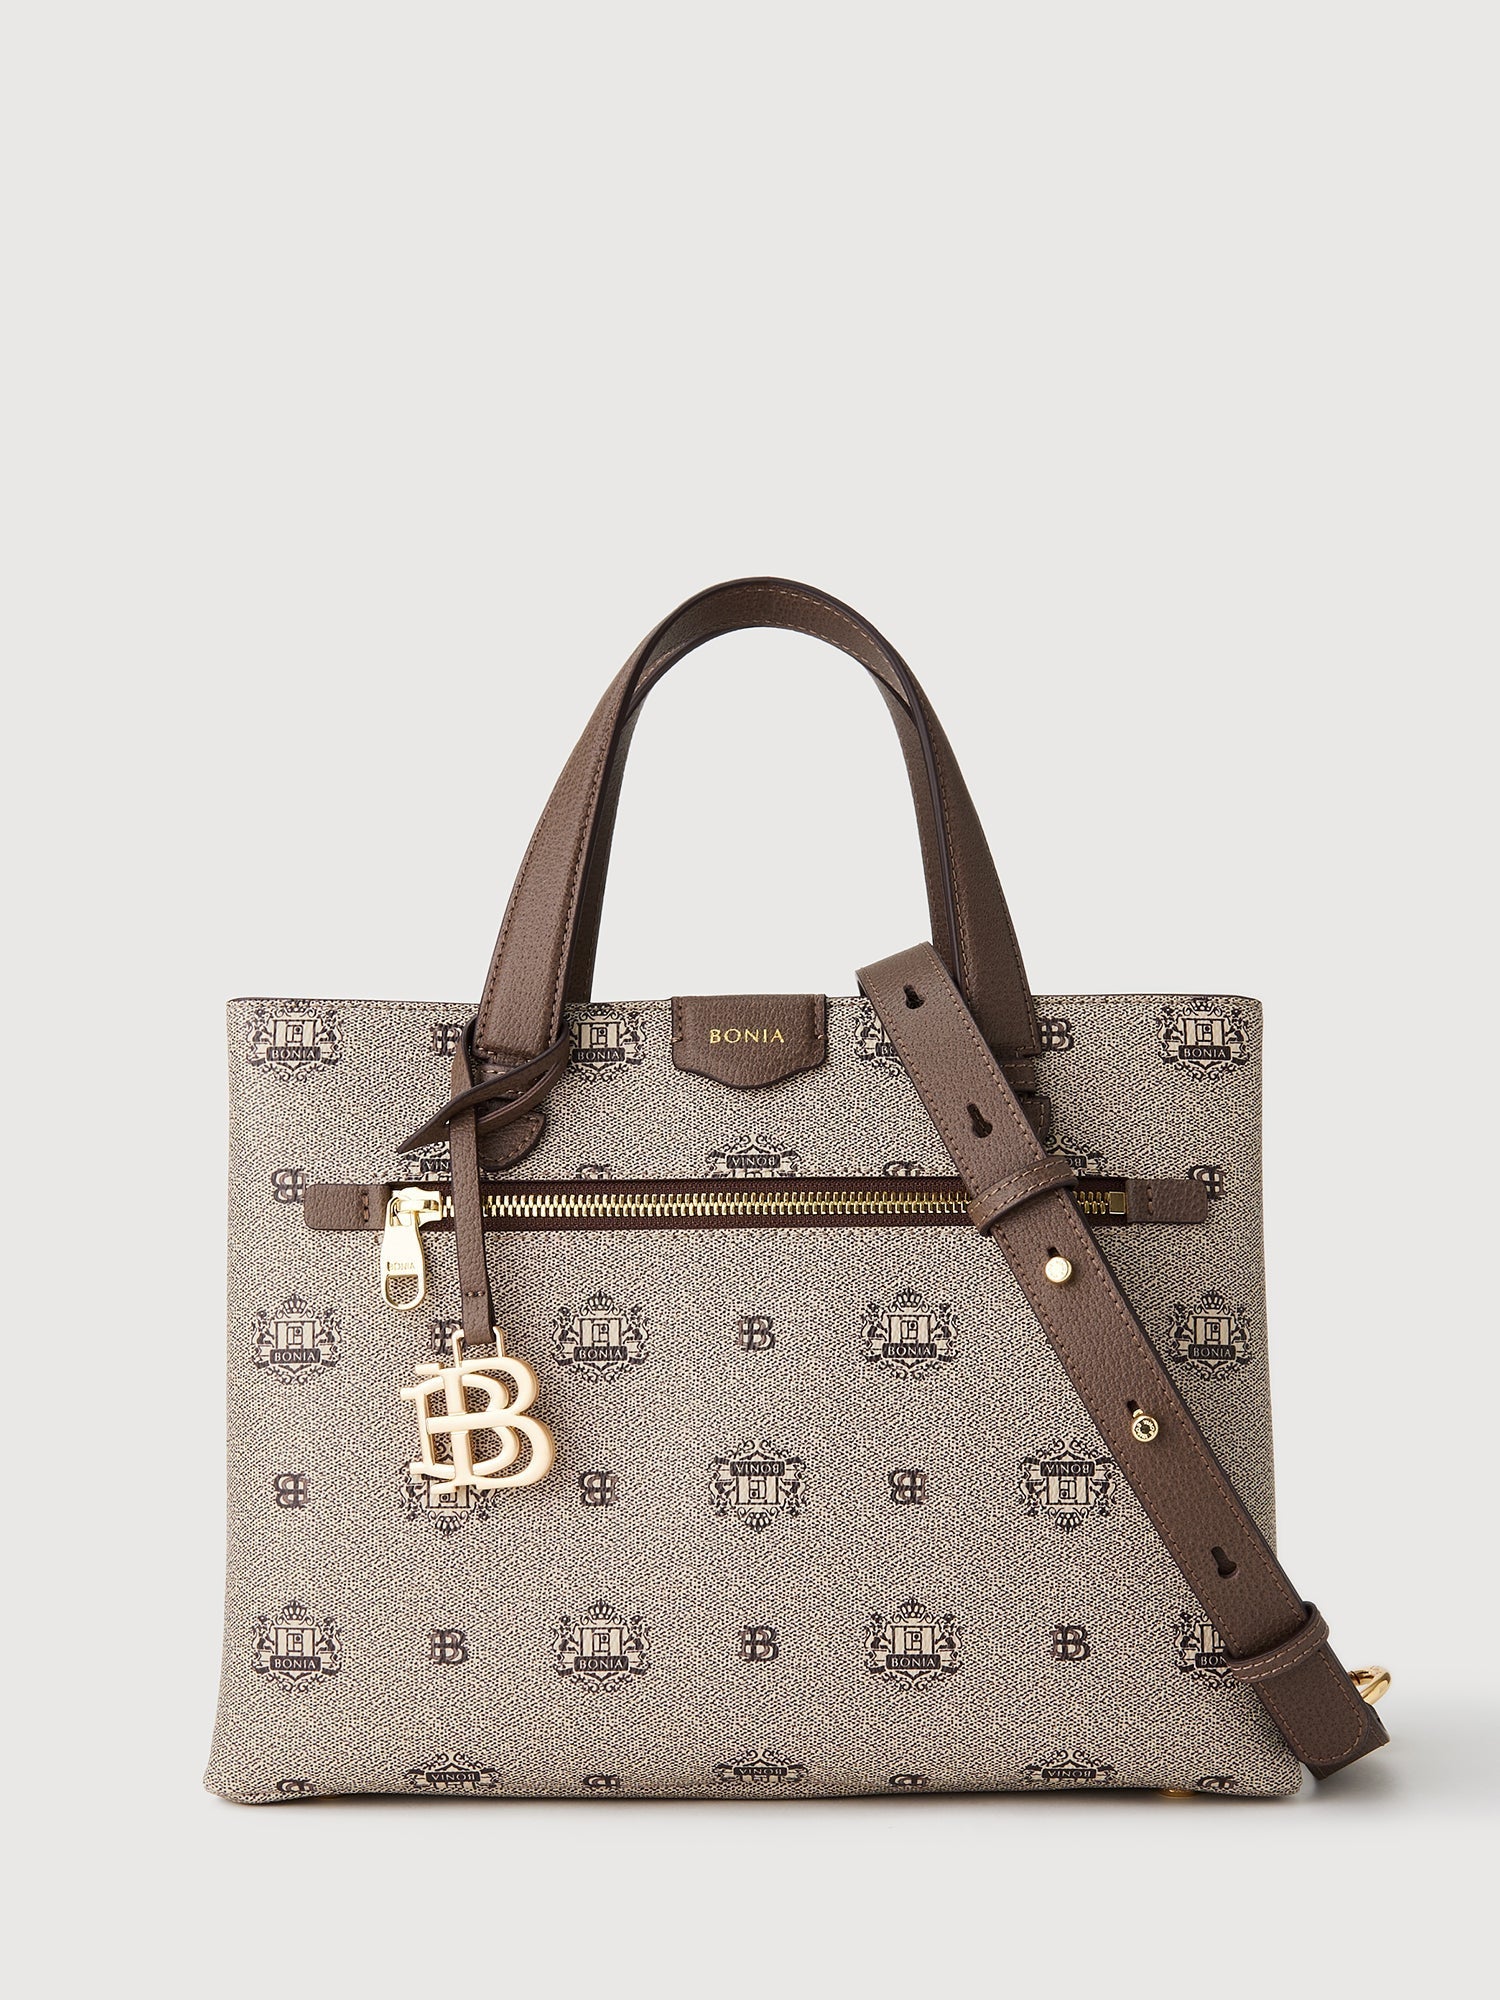 Bonia Elle Satchel Women's Bag with Adjustable Strap 860369-001-04